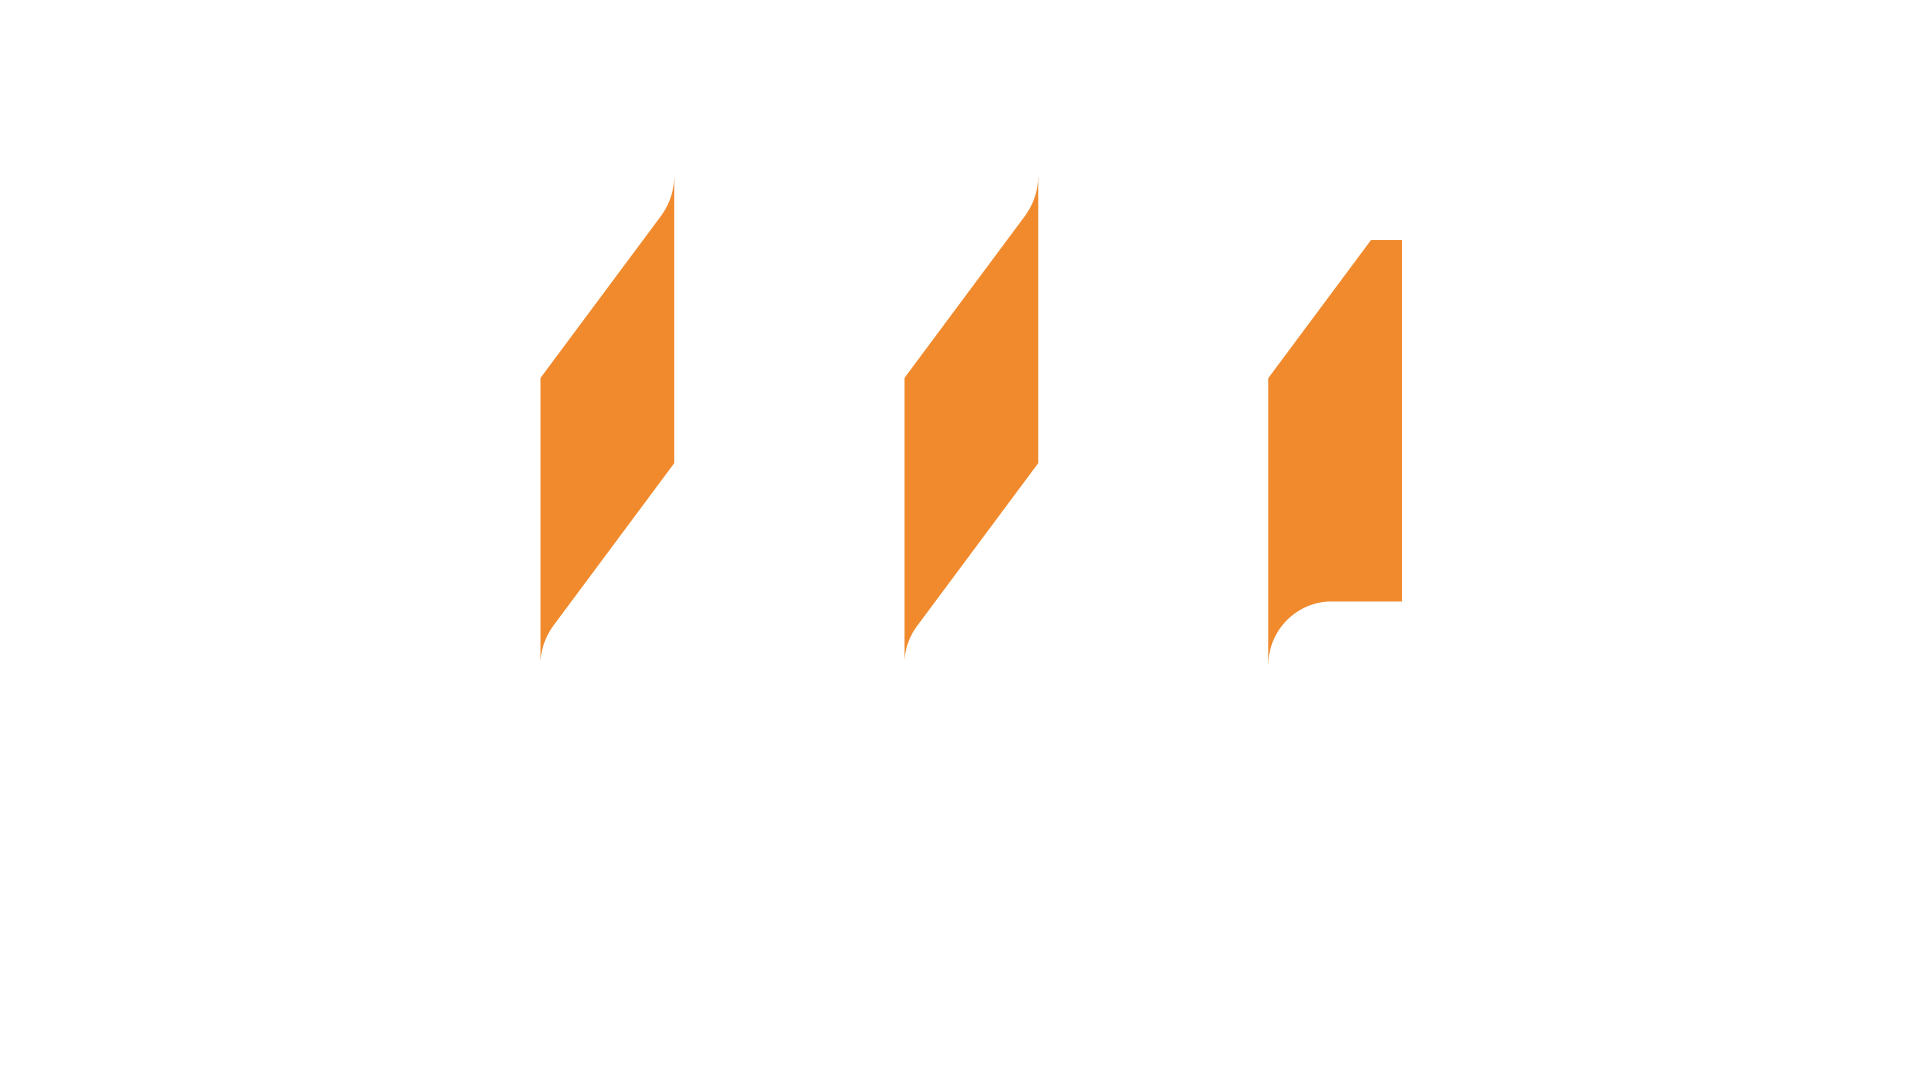 MOURA DUBEUX